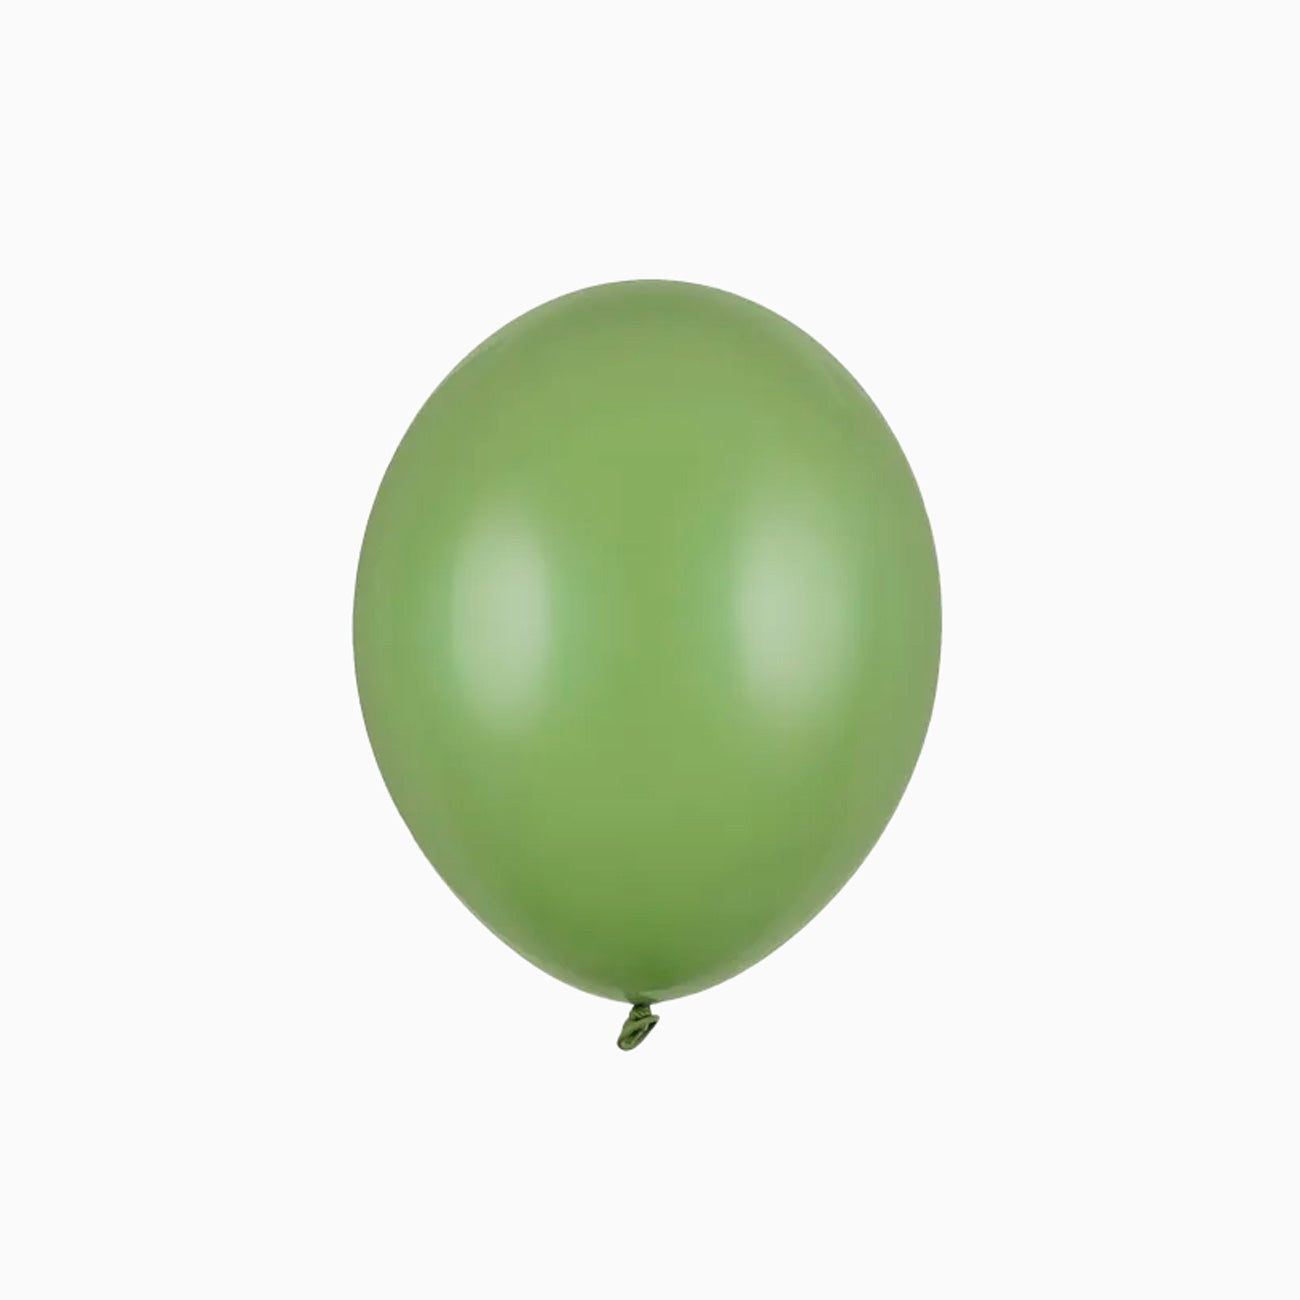 Romero green latex balloon